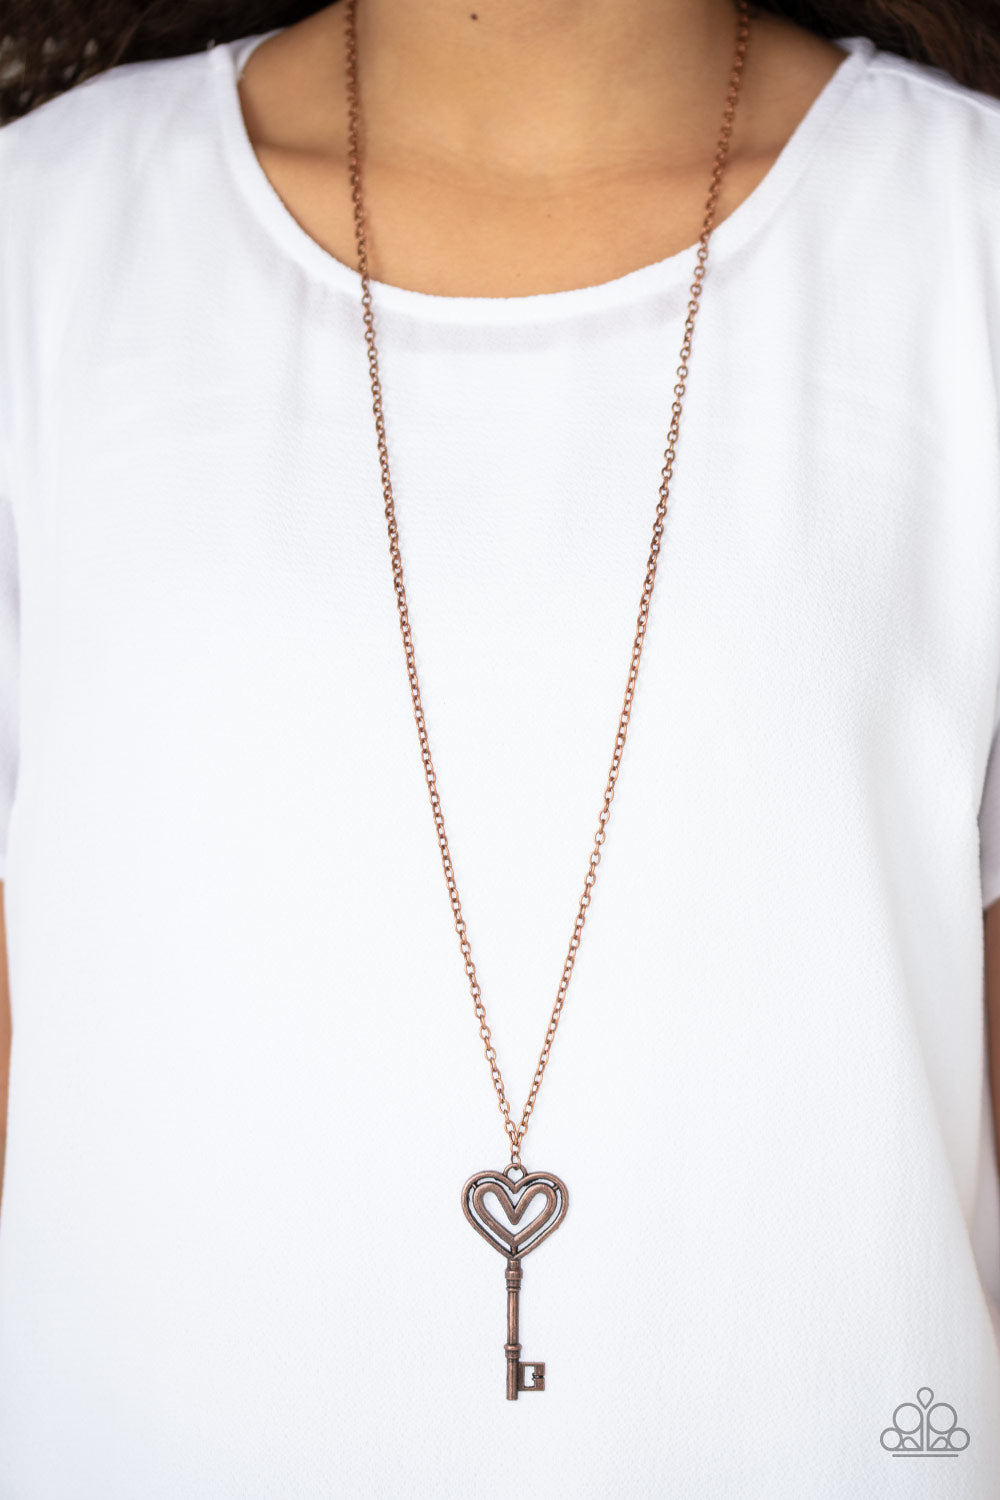 Unlock My Heart Copper Necklace